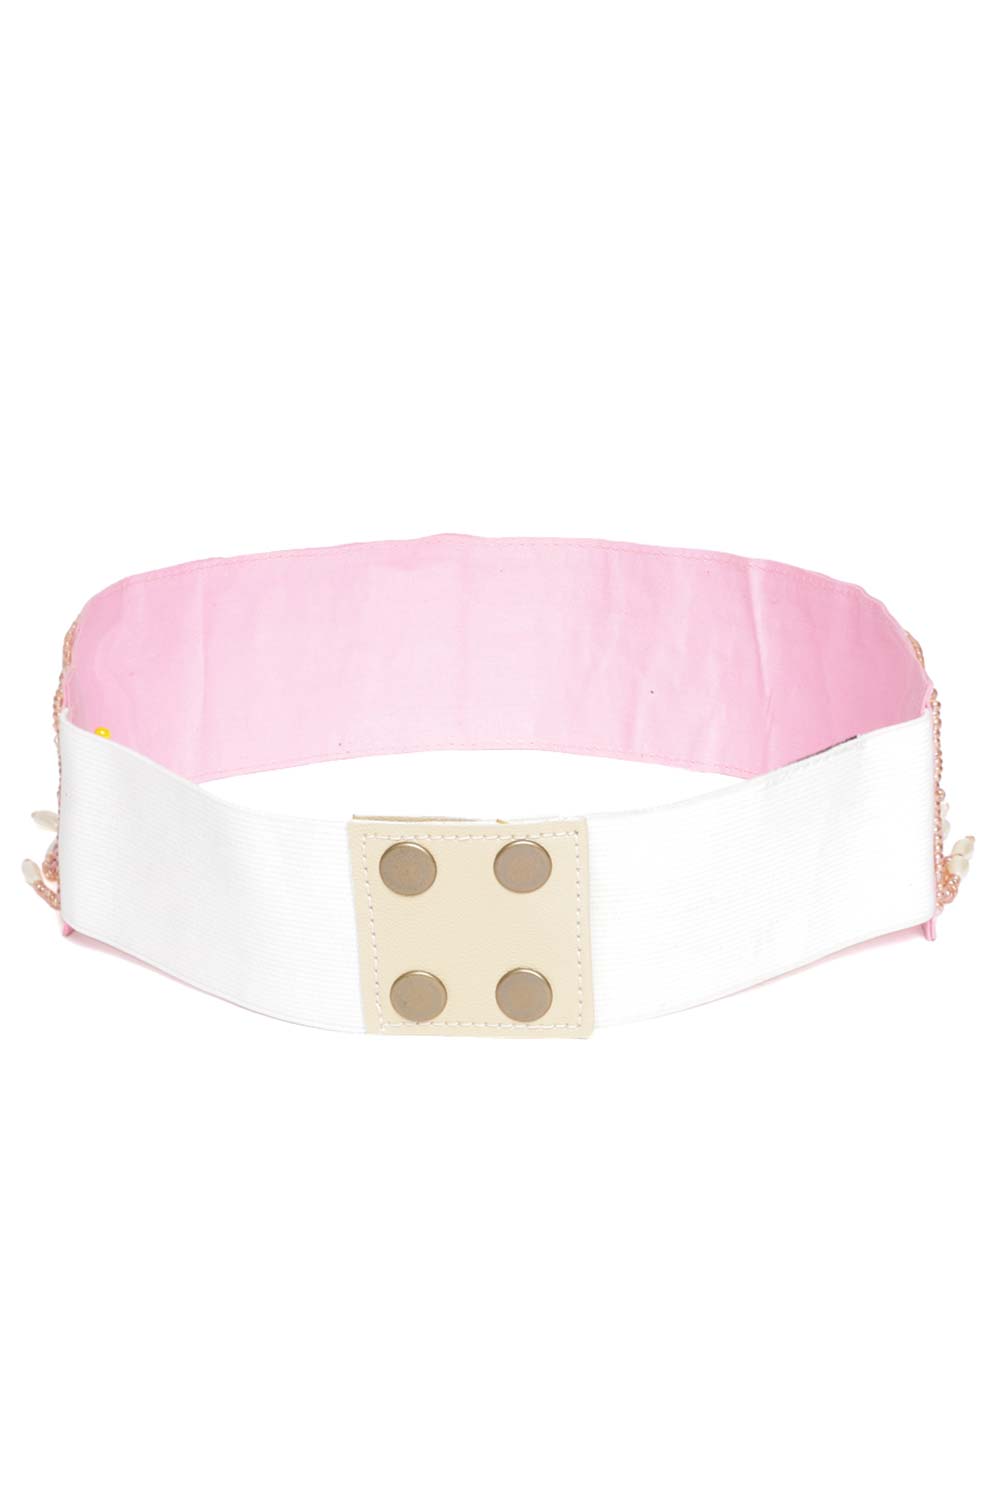 Striped Bead Work Saree Belt in Baby Pink & Multi